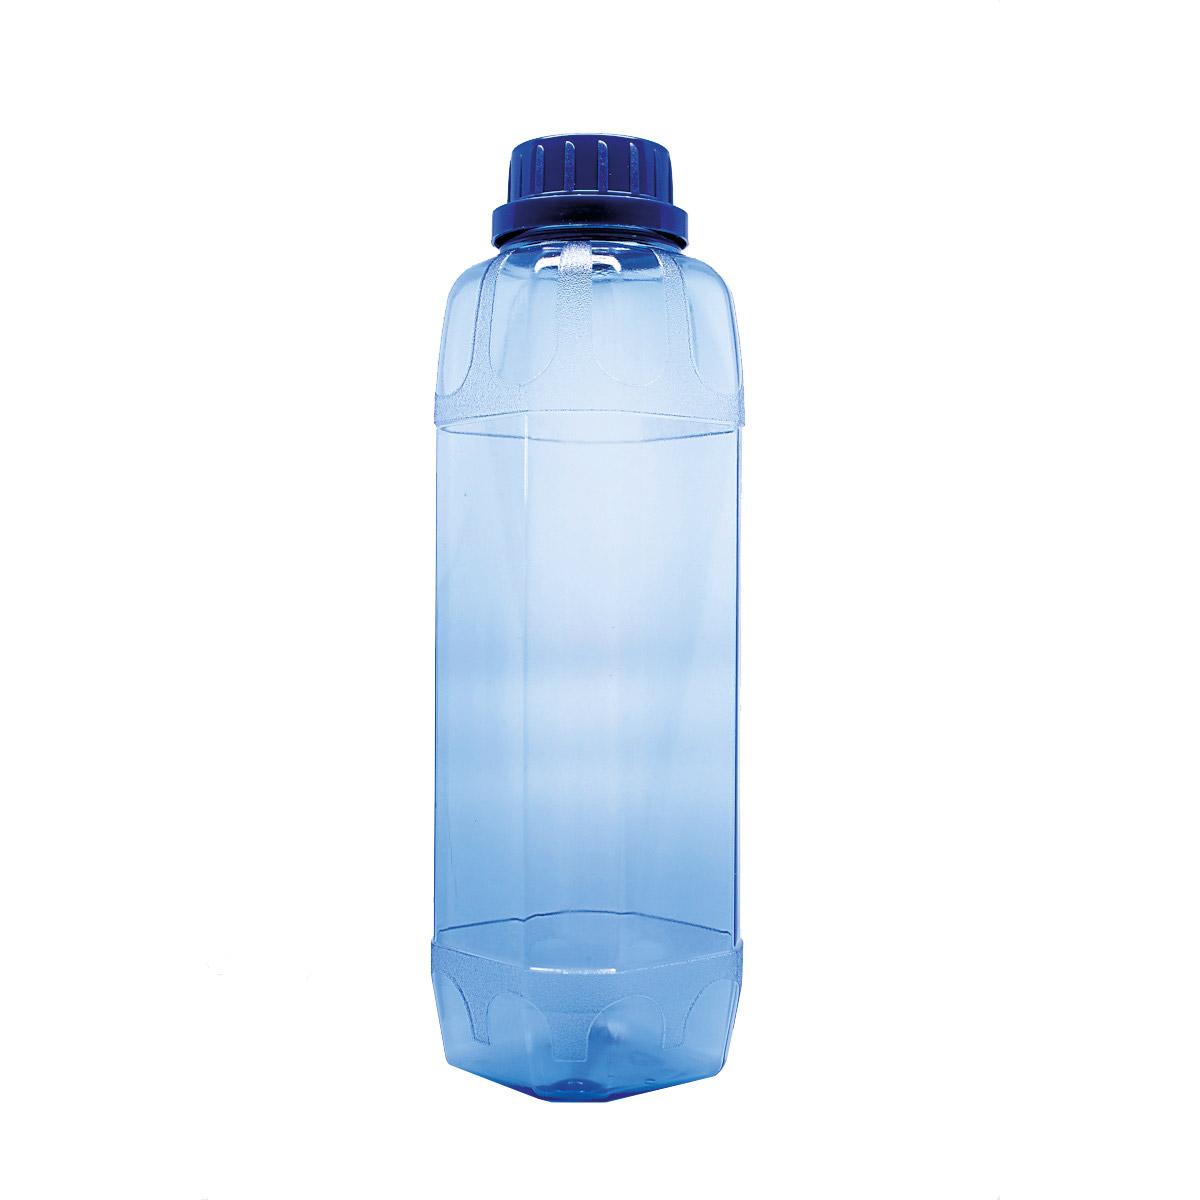 GLAS BPA FREIE TRINKFLASCHE 550 ml 0,55 L TRANSPARENT BLAU 2178-1116 NEU & OVP 